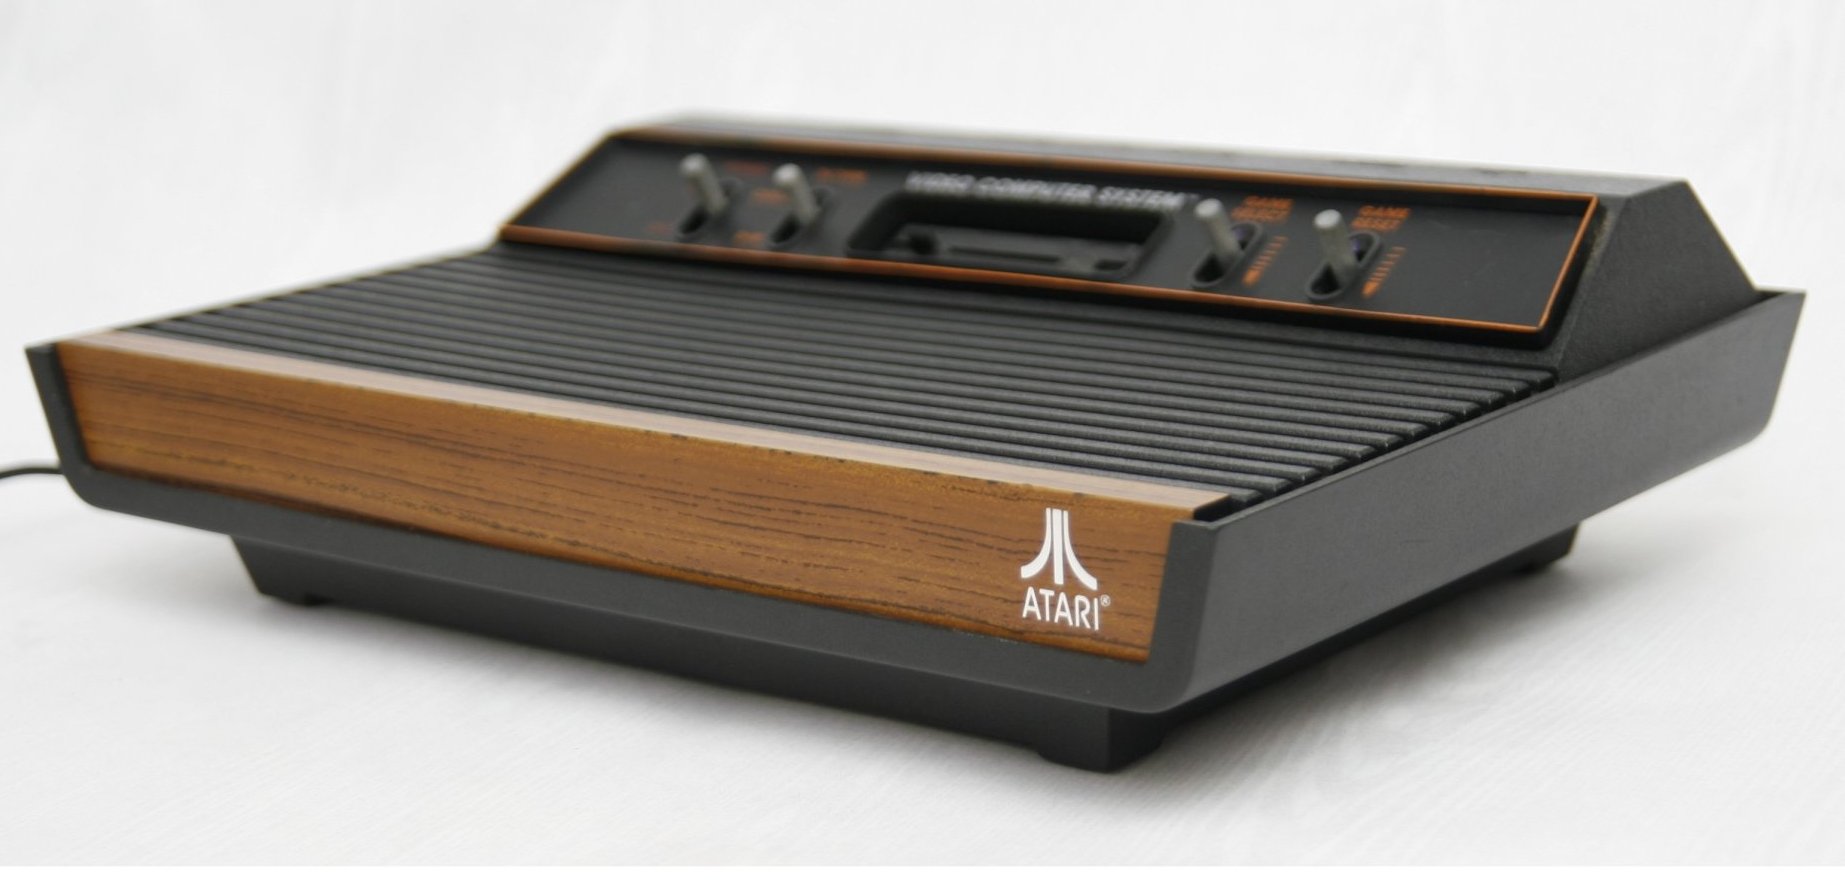 Atari 2600 games download for raspberry pi